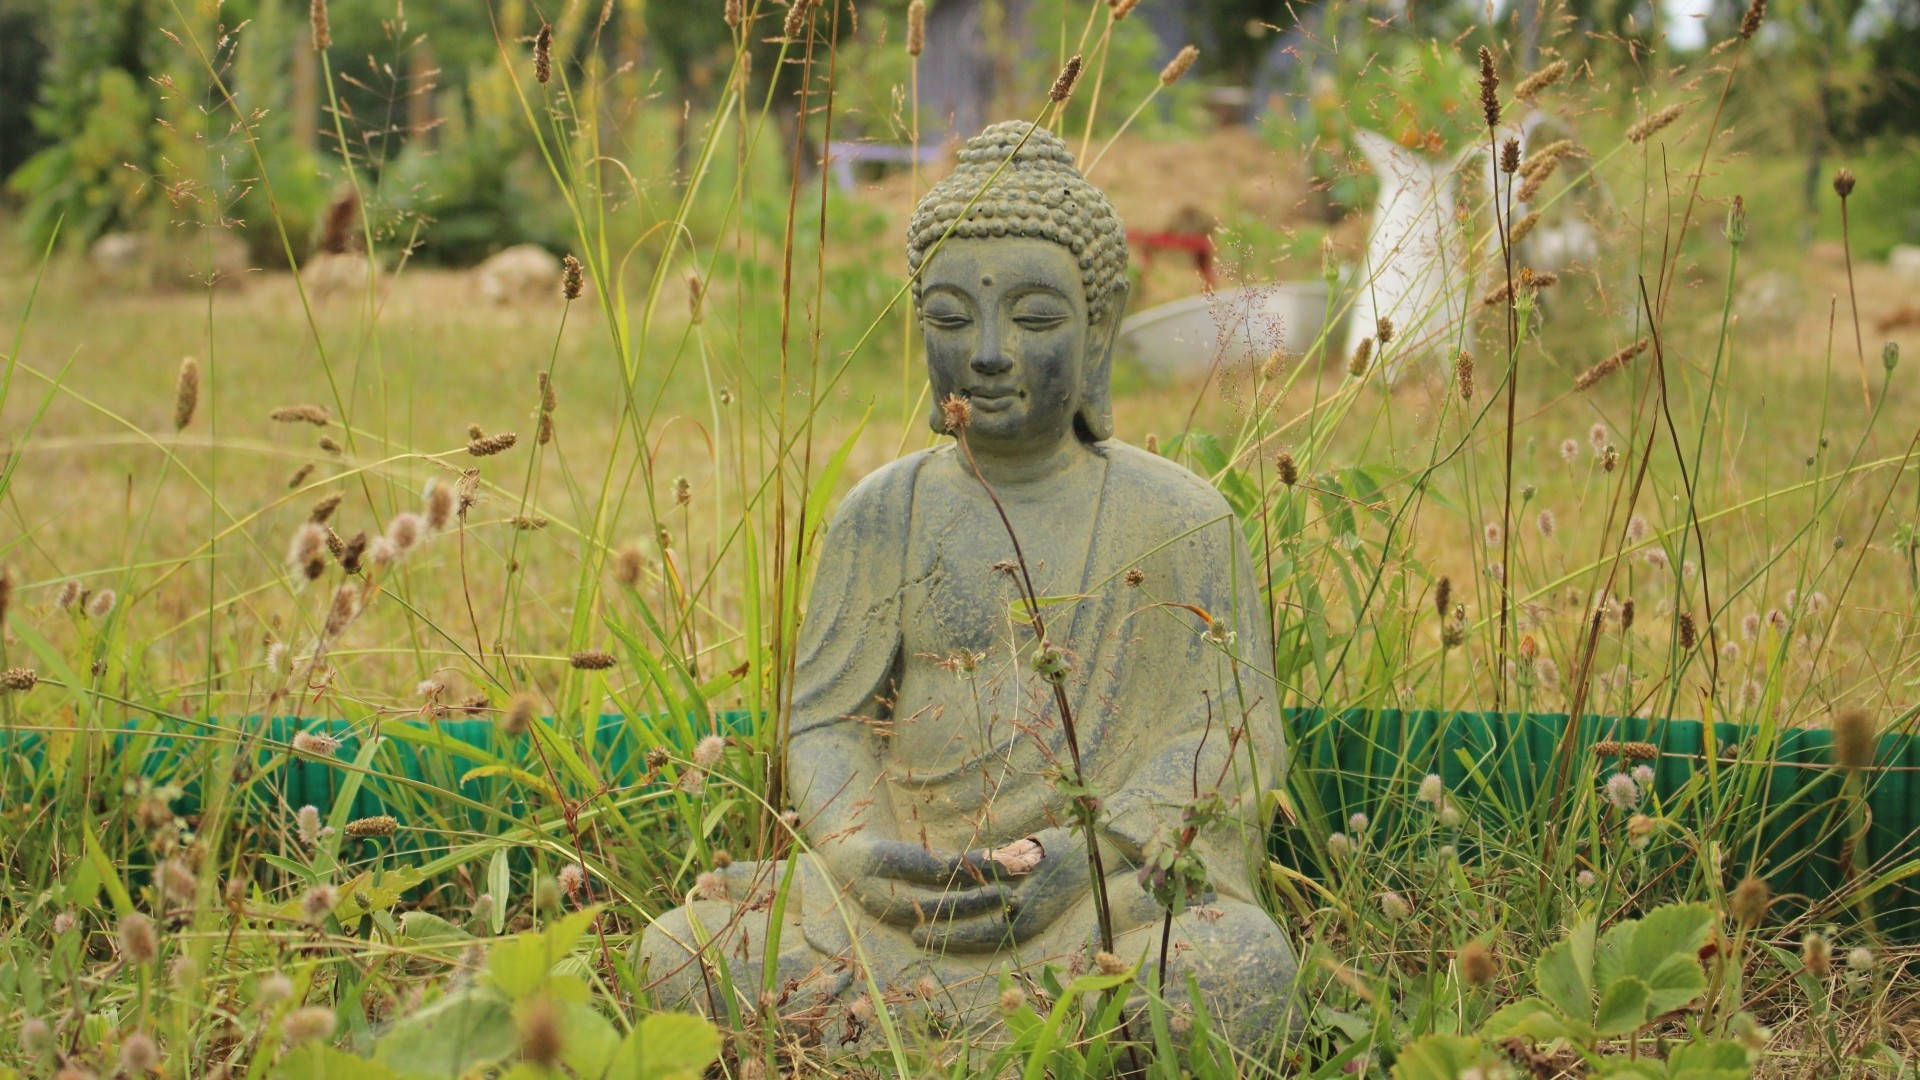 Buddha's Meditation I et Vast Felt Wallpaper